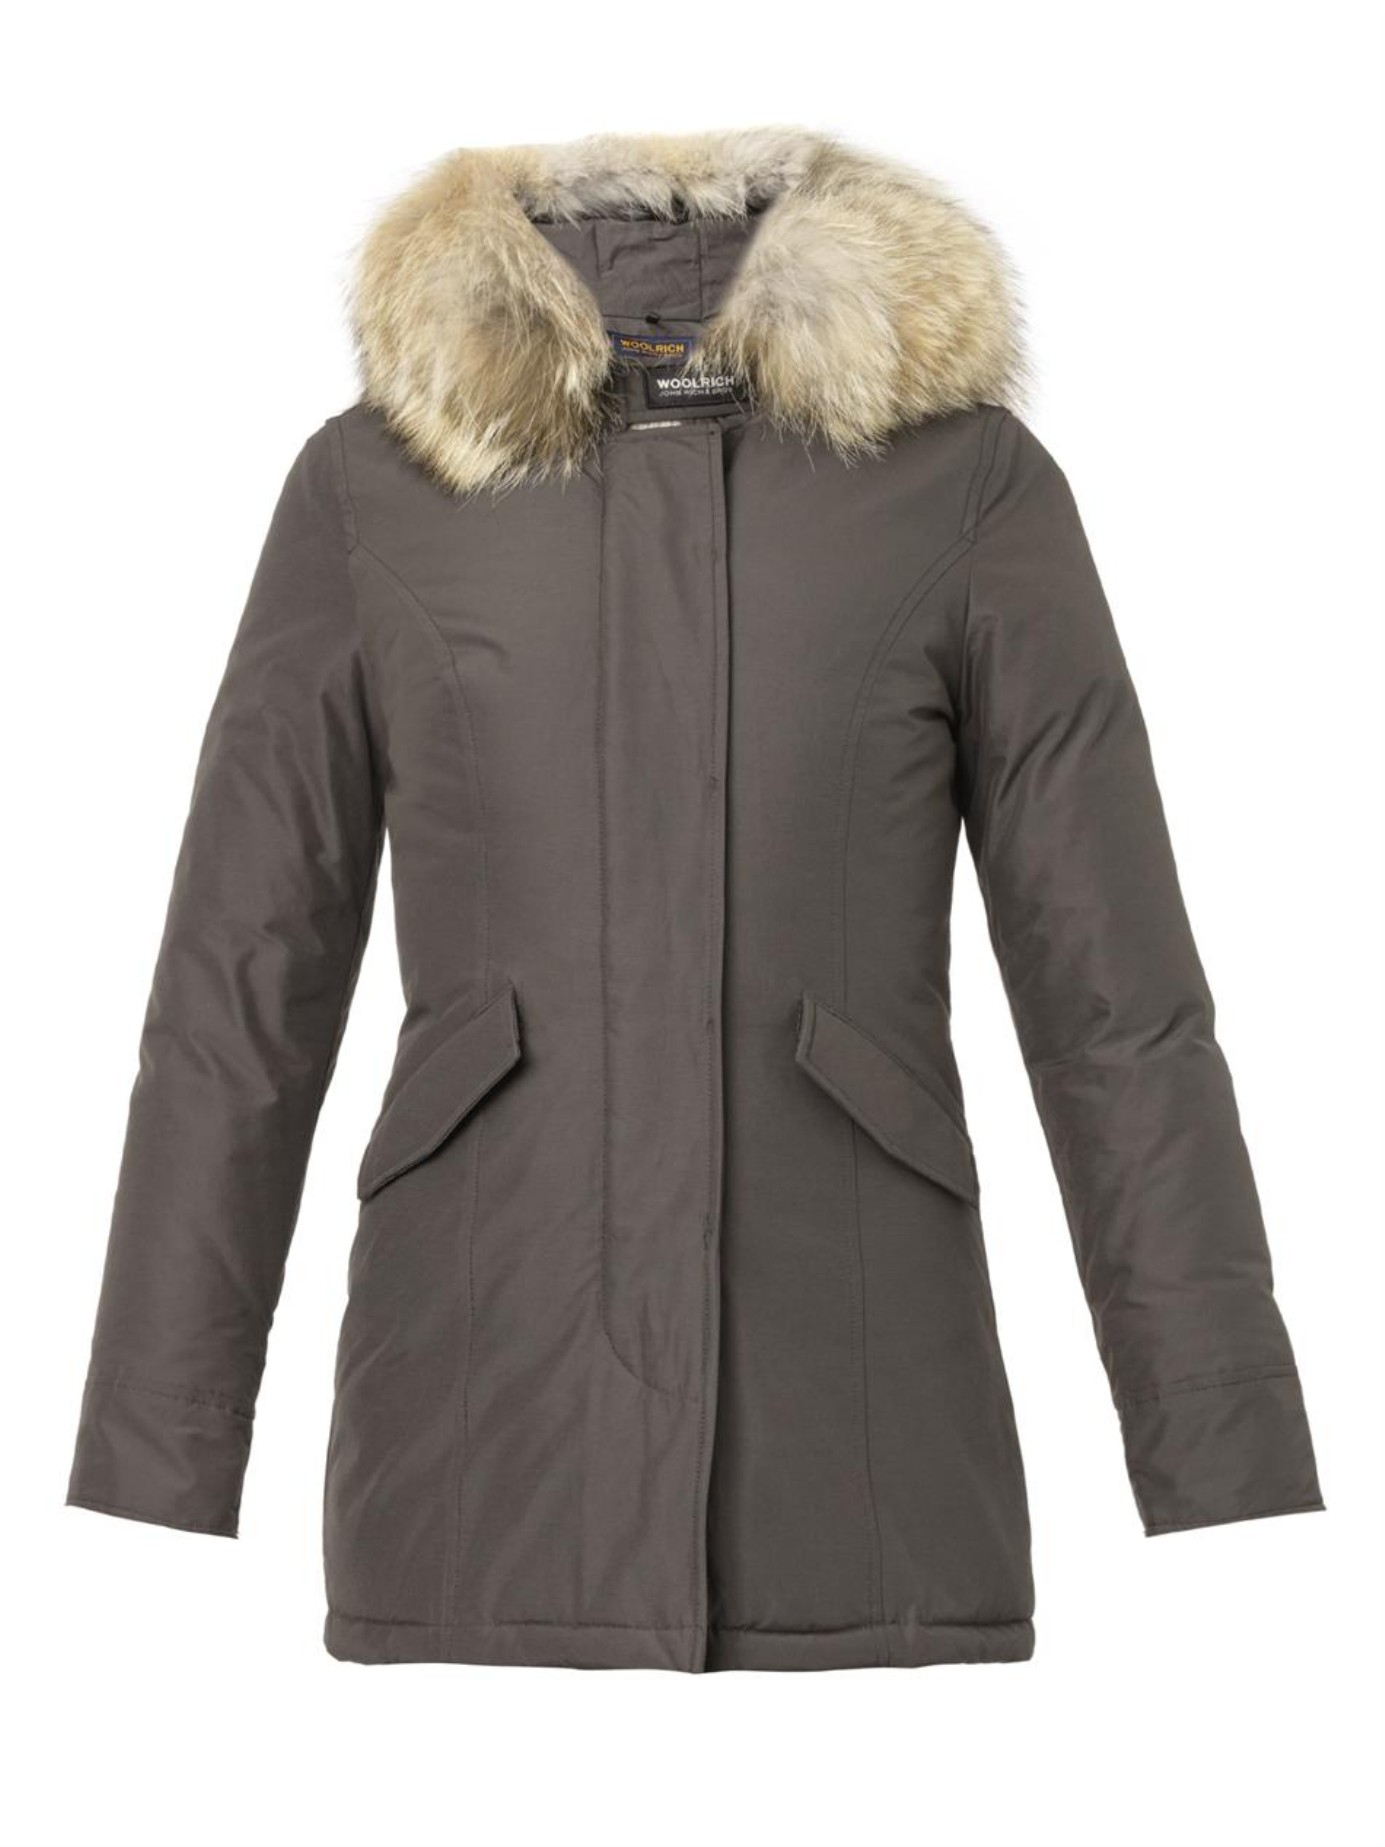 Lyst - Woolrich Arctic Fur-Hood Down Parka Jacket in Black